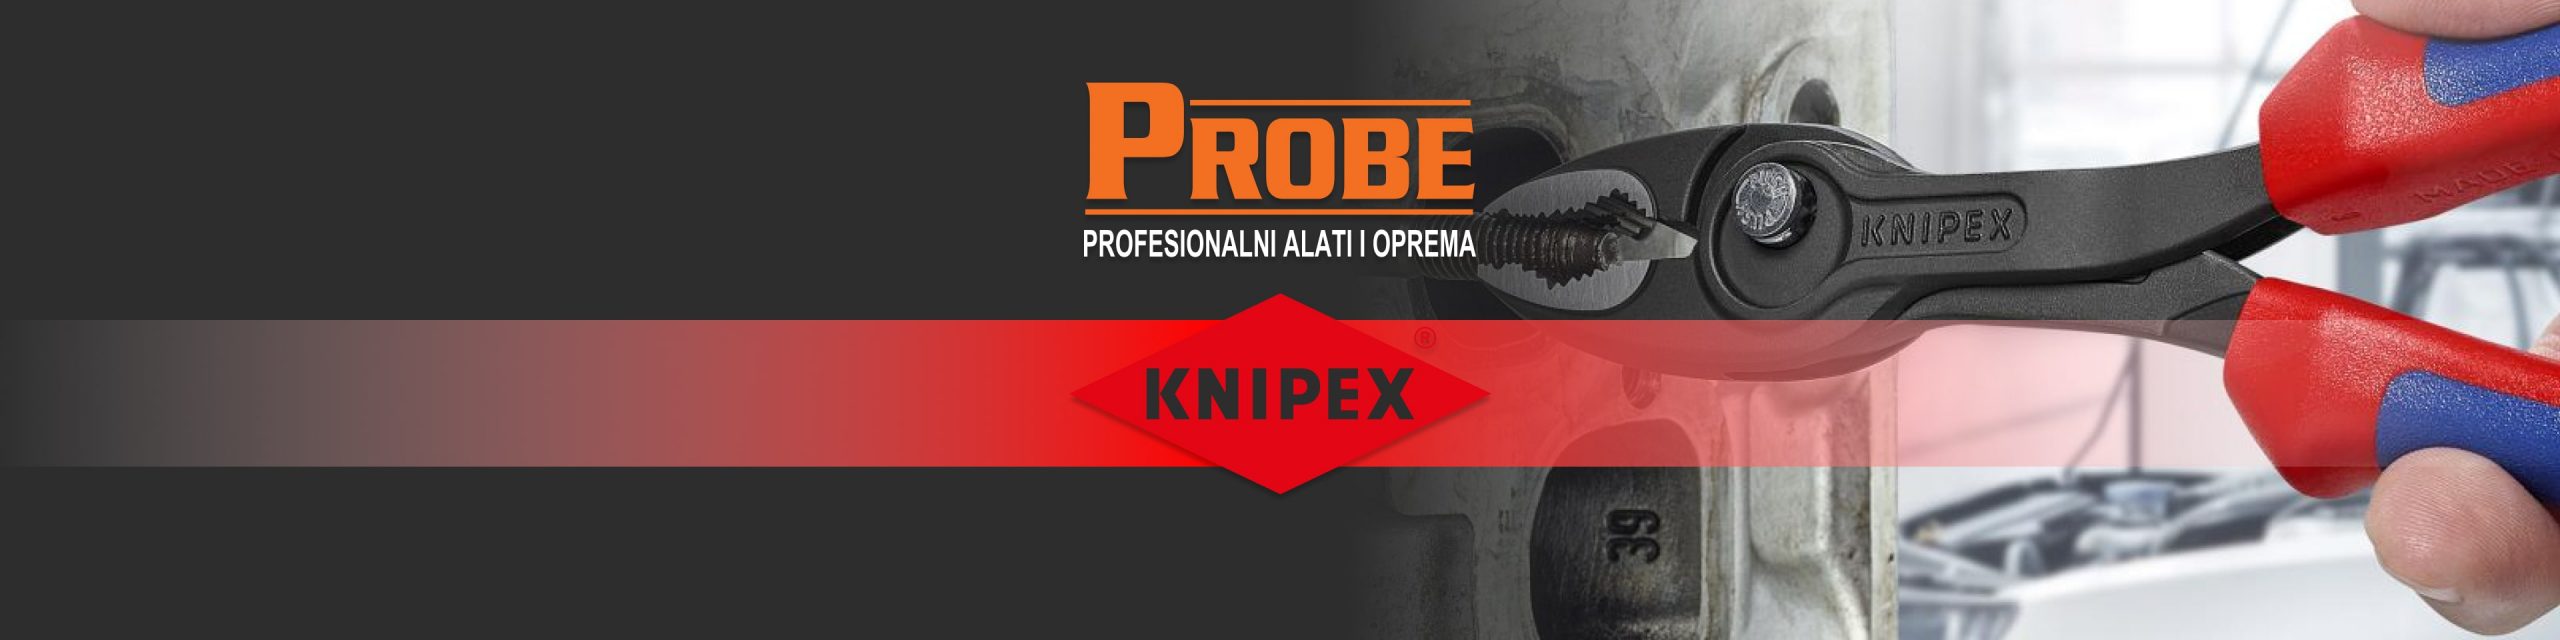 knipex brand